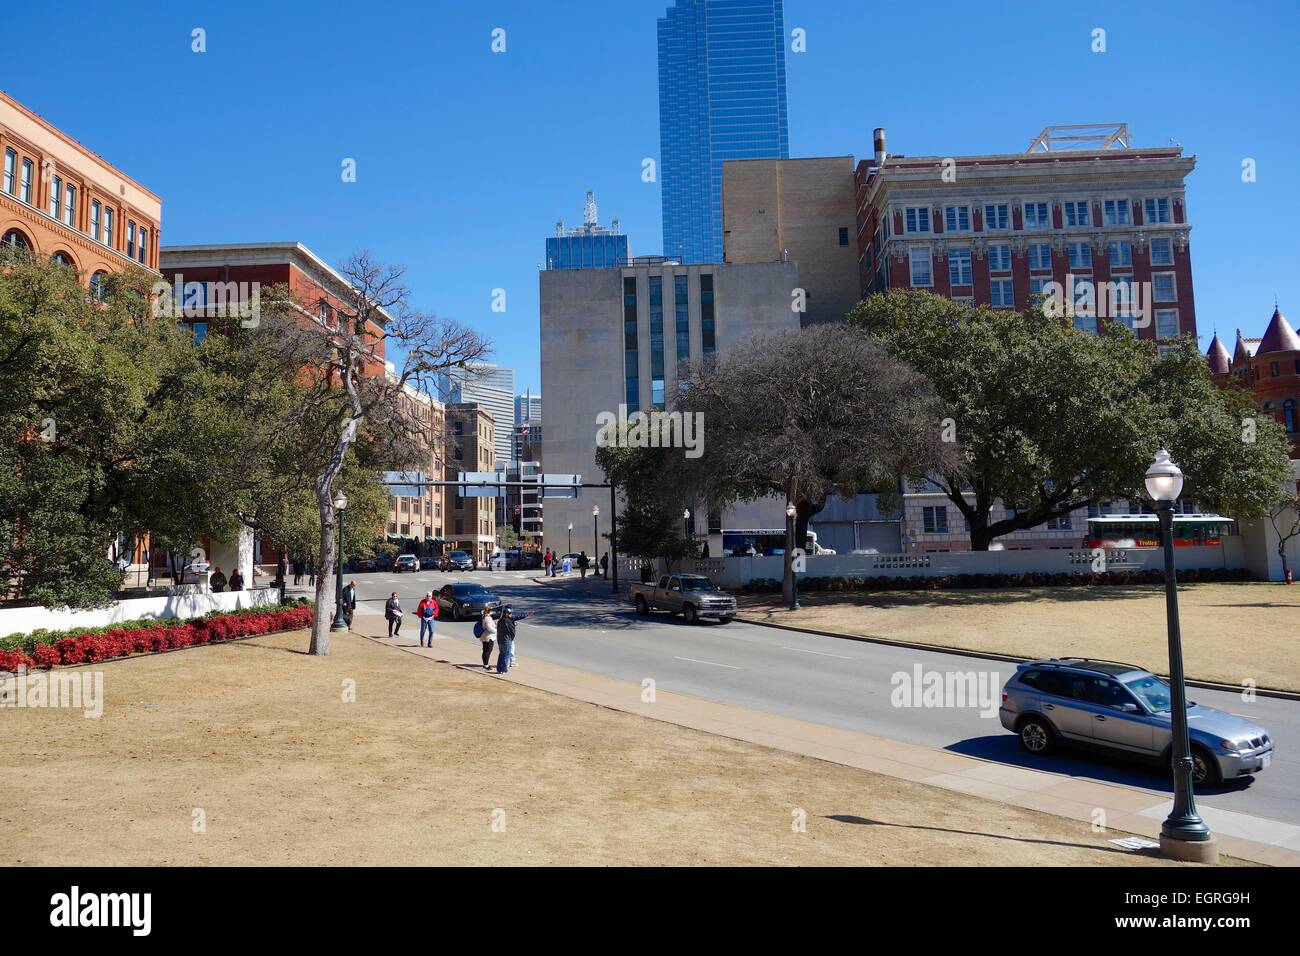 Dealey Plaza, Dallas Texas, site of JFK assassination. Stock Photo